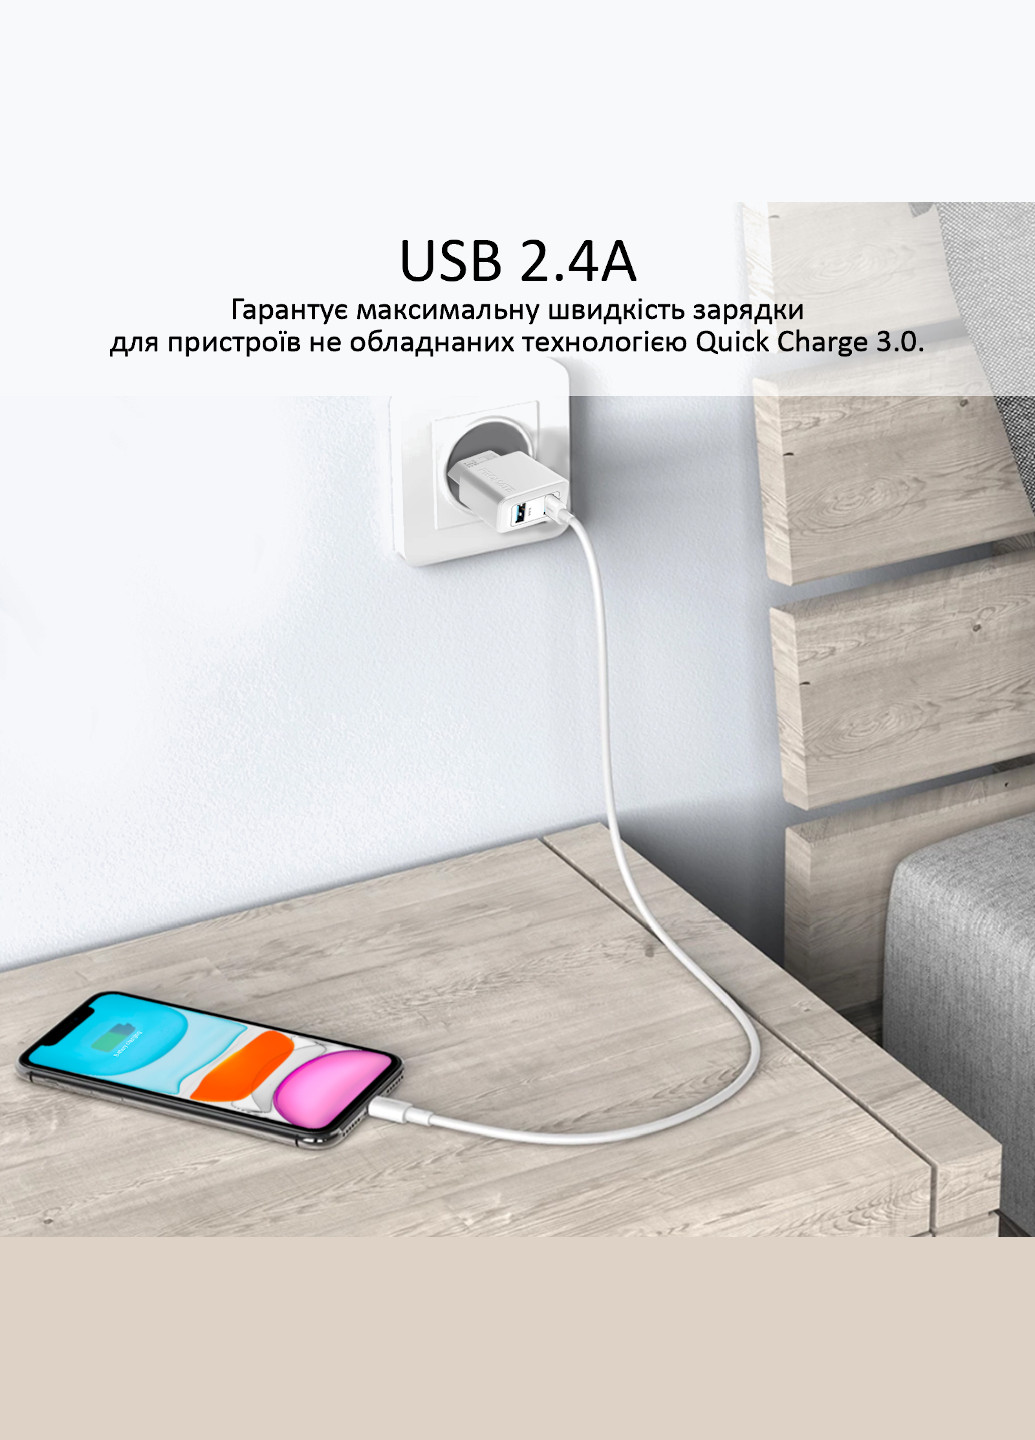 Сетевое зарядное устройство BiPlug 12Вт 2 USB White Promate biplug.white (185445532)